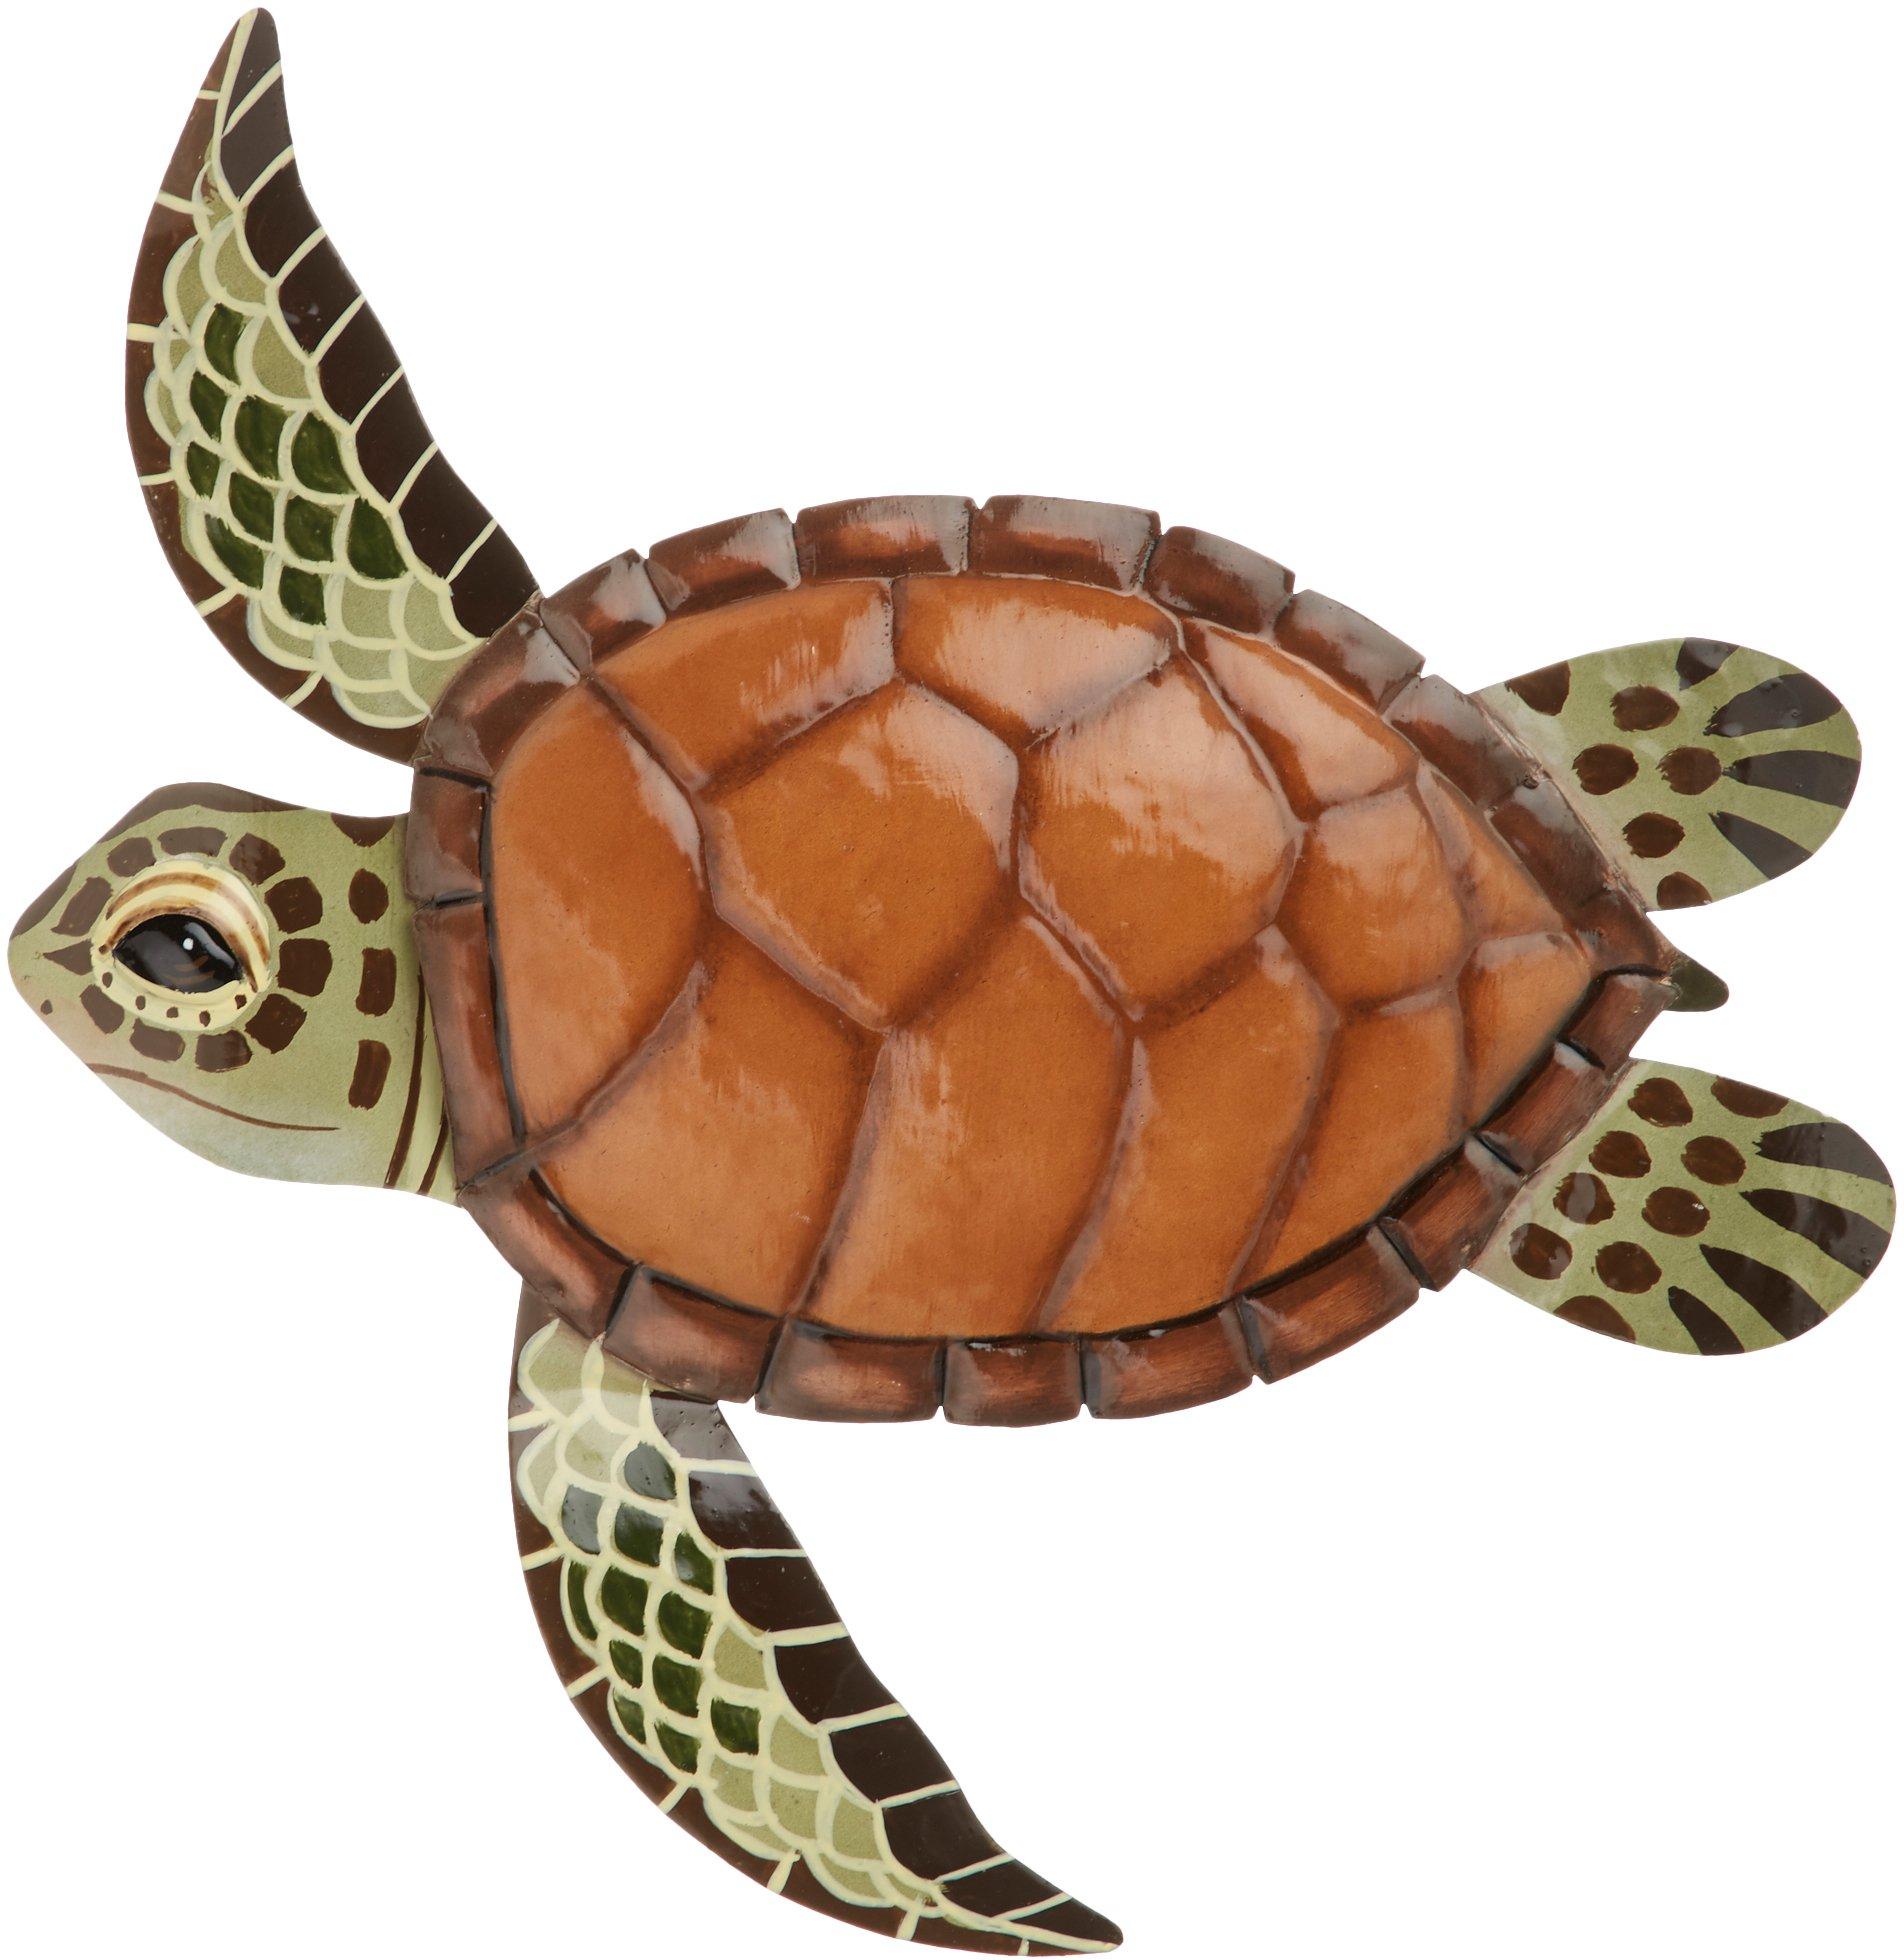 DIY Sea Turtle Wooden Baby Rattle Digital Plans 